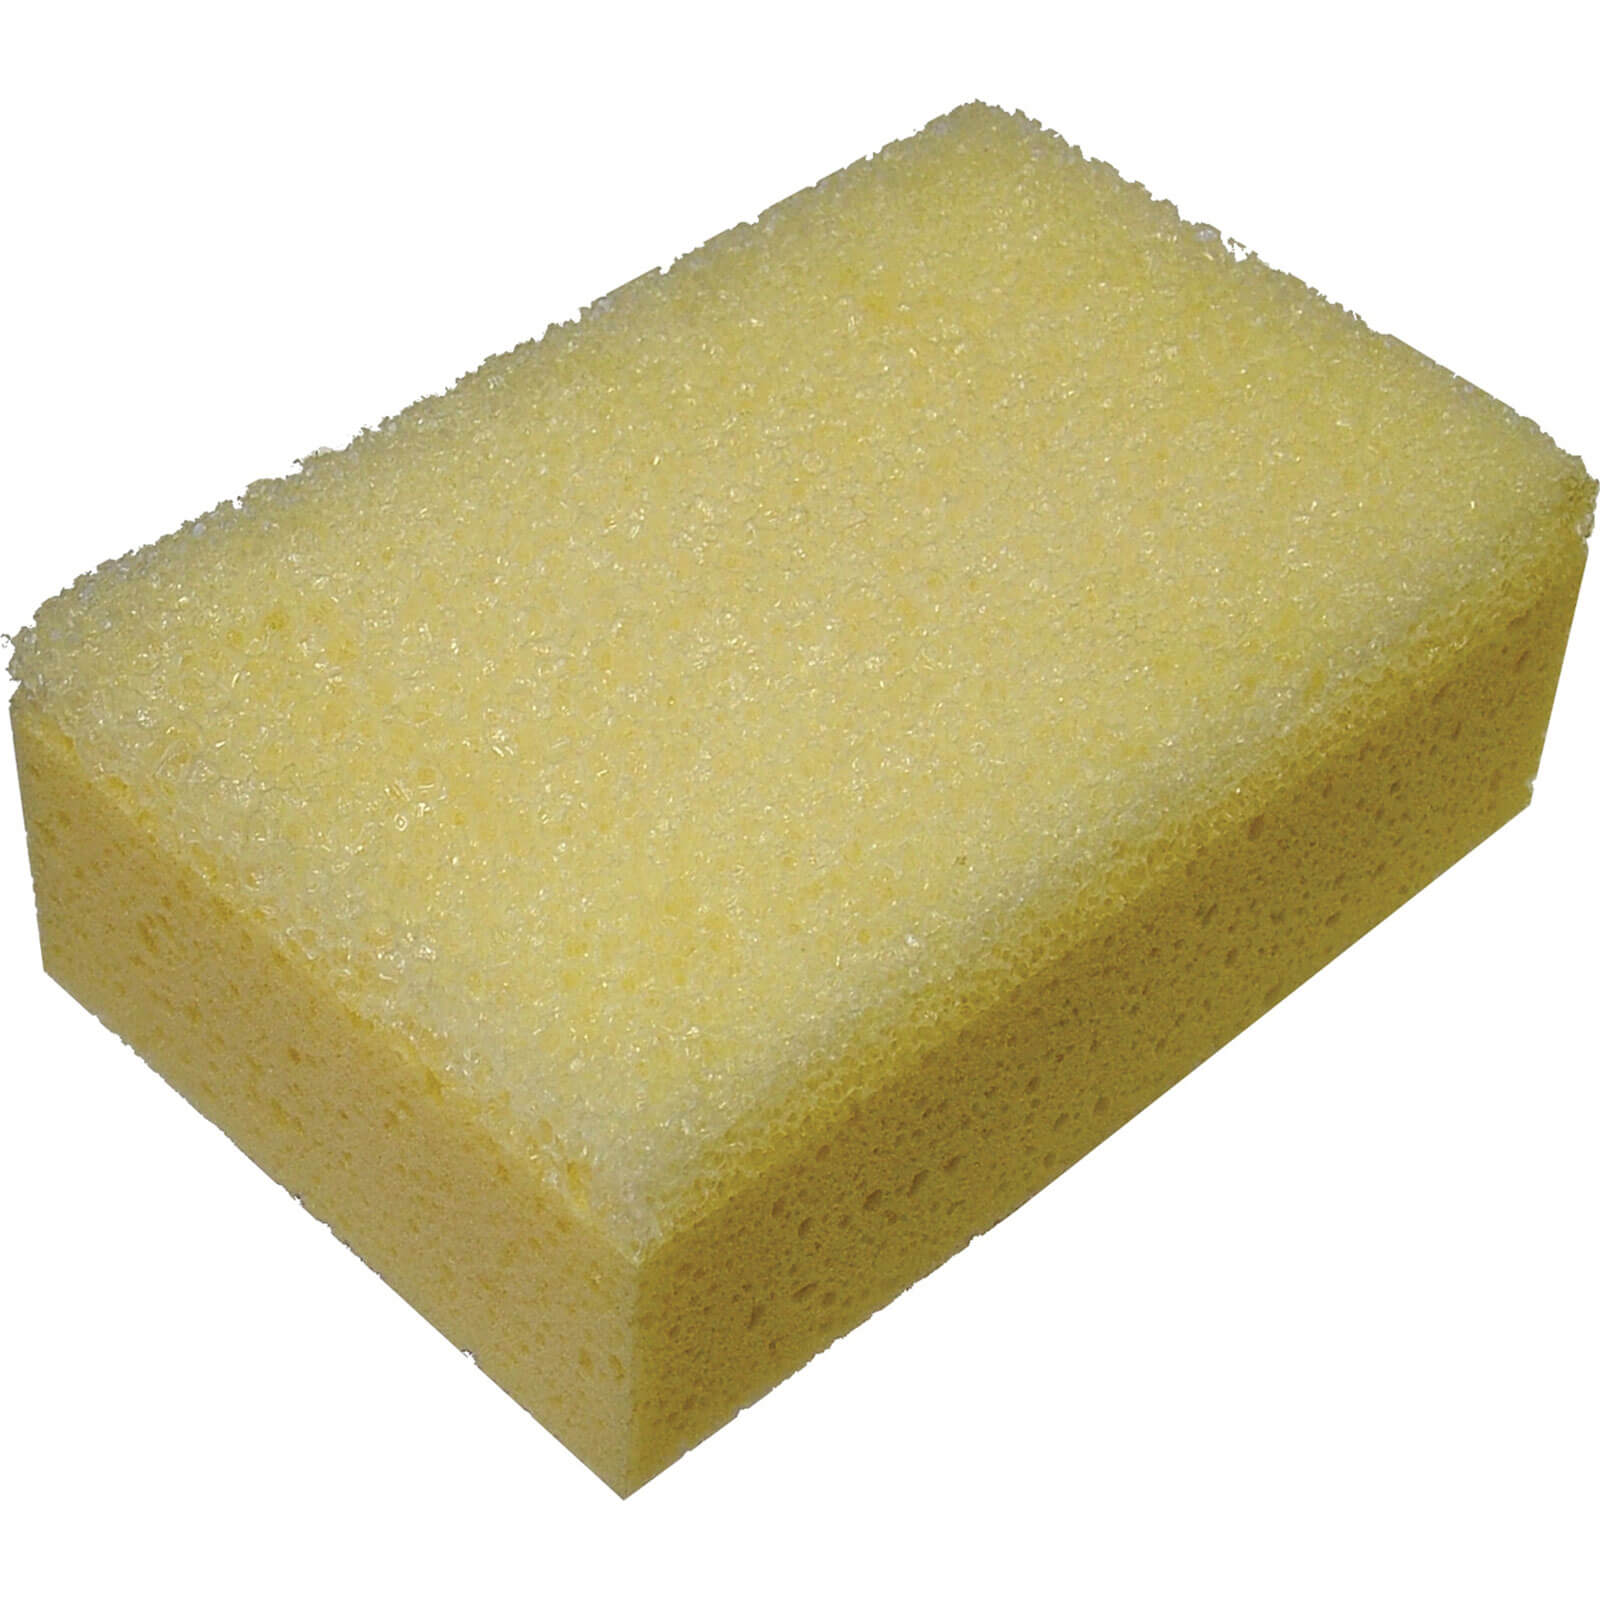 Photo of Faithfull Professional Tile Grouting Sponge